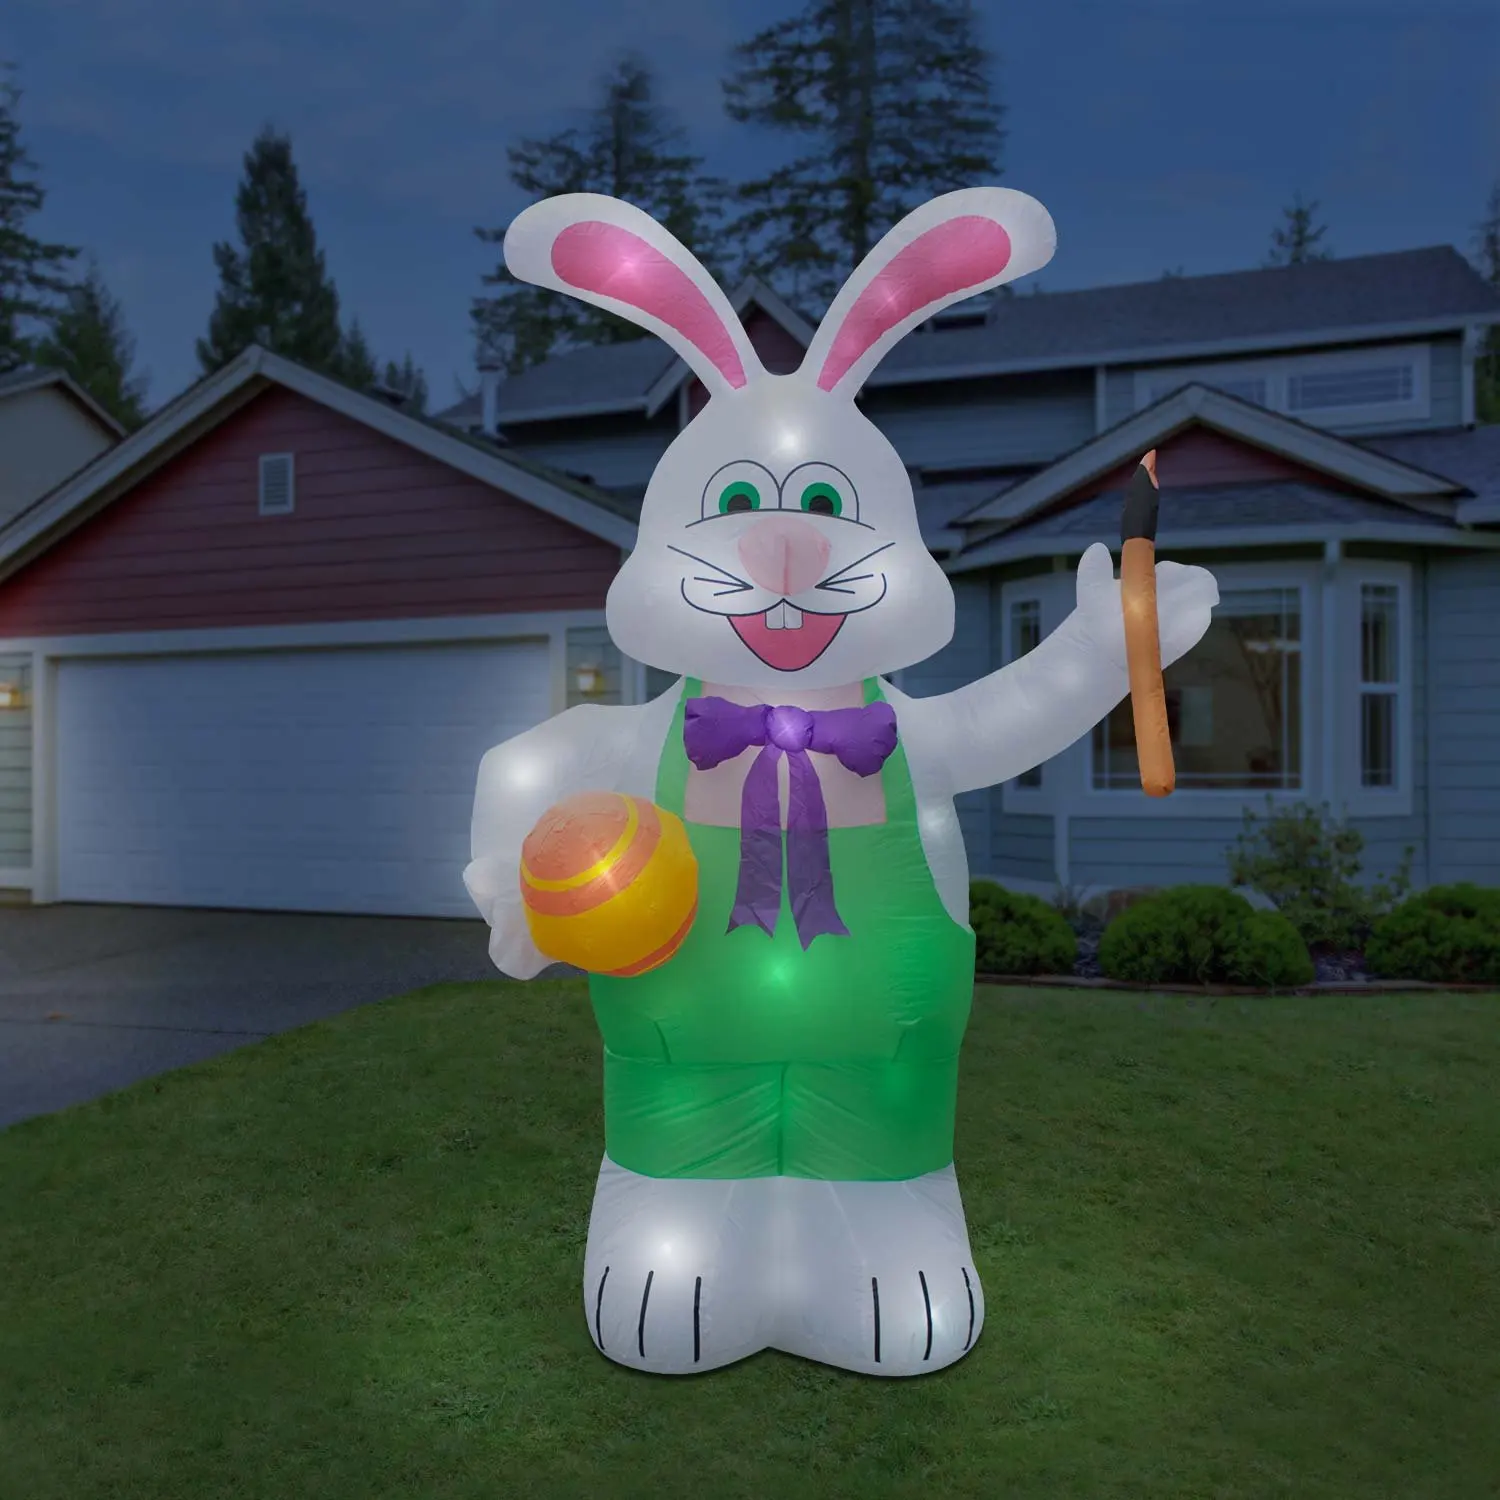 Buy Holidayana Easter Inflatable / Bunny in Basket Easter Bunny ...